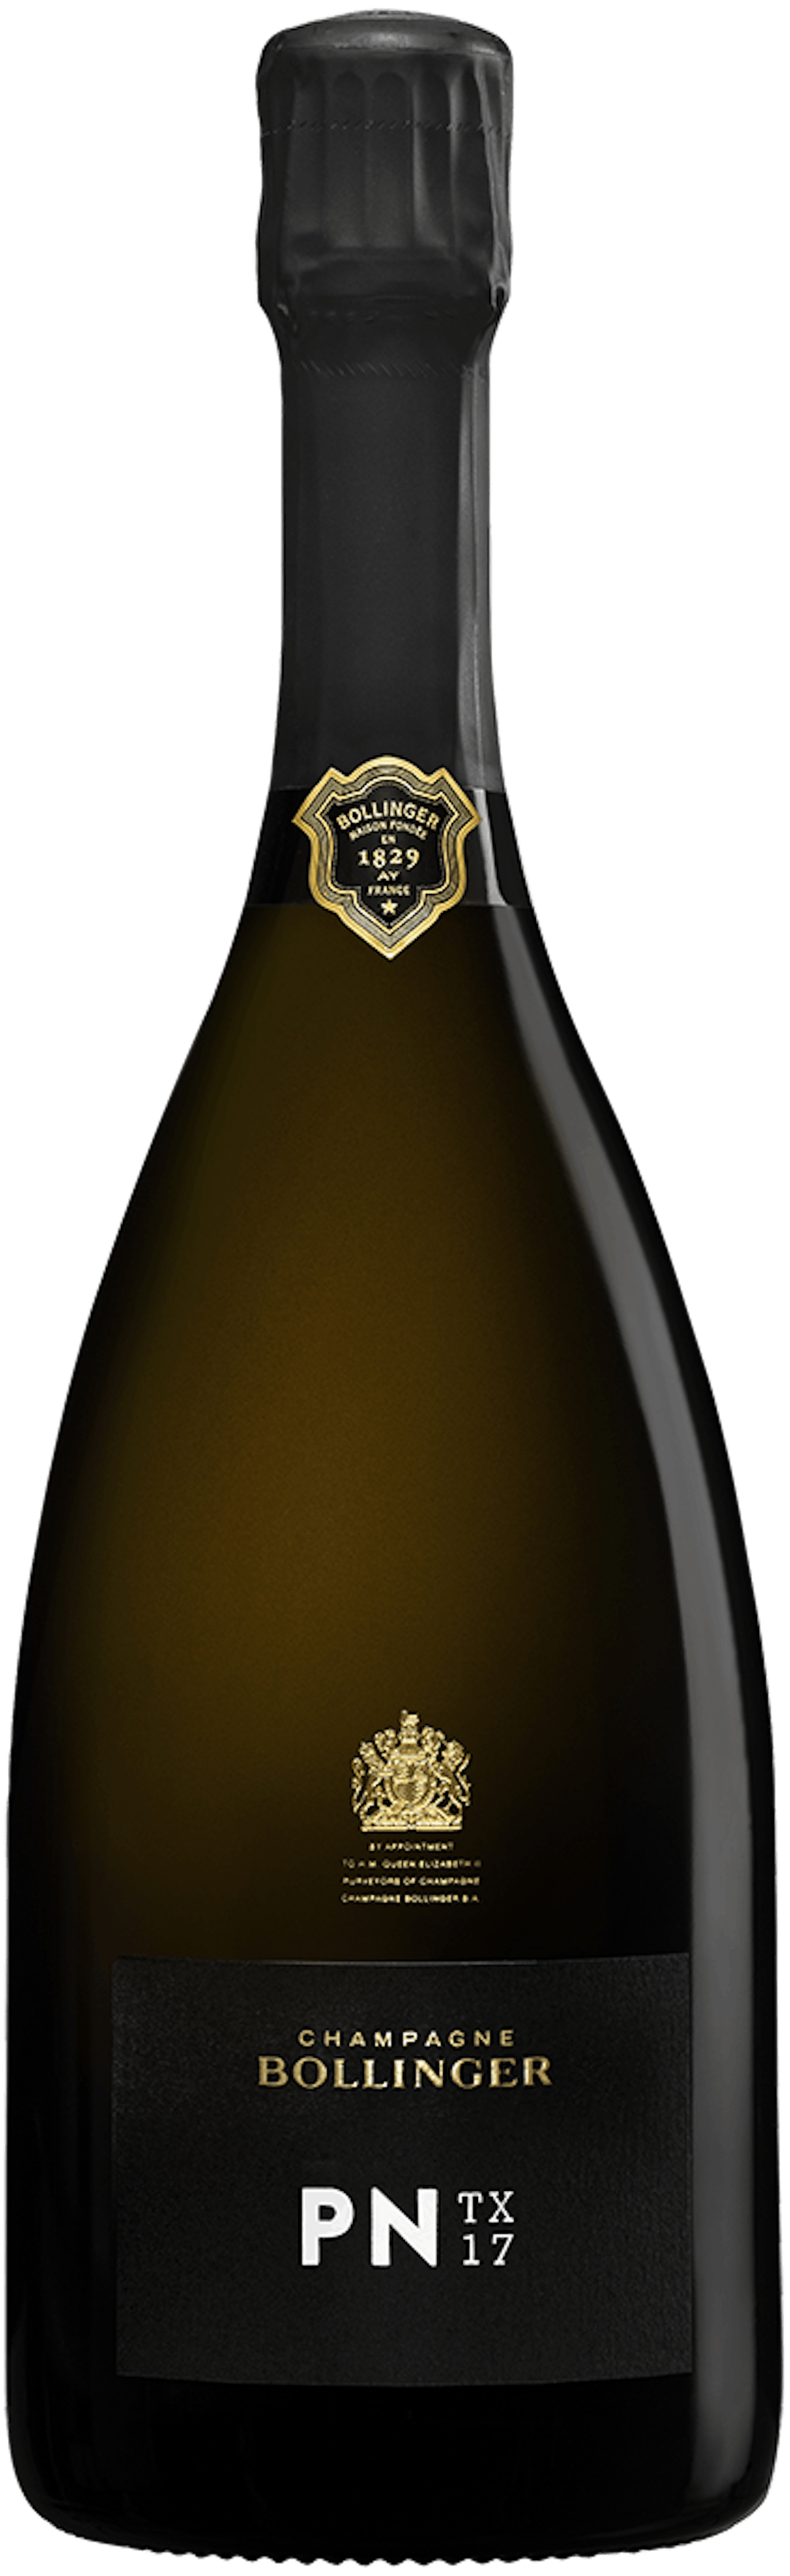 TX Pinot Noir Champagne brut ohne Etui